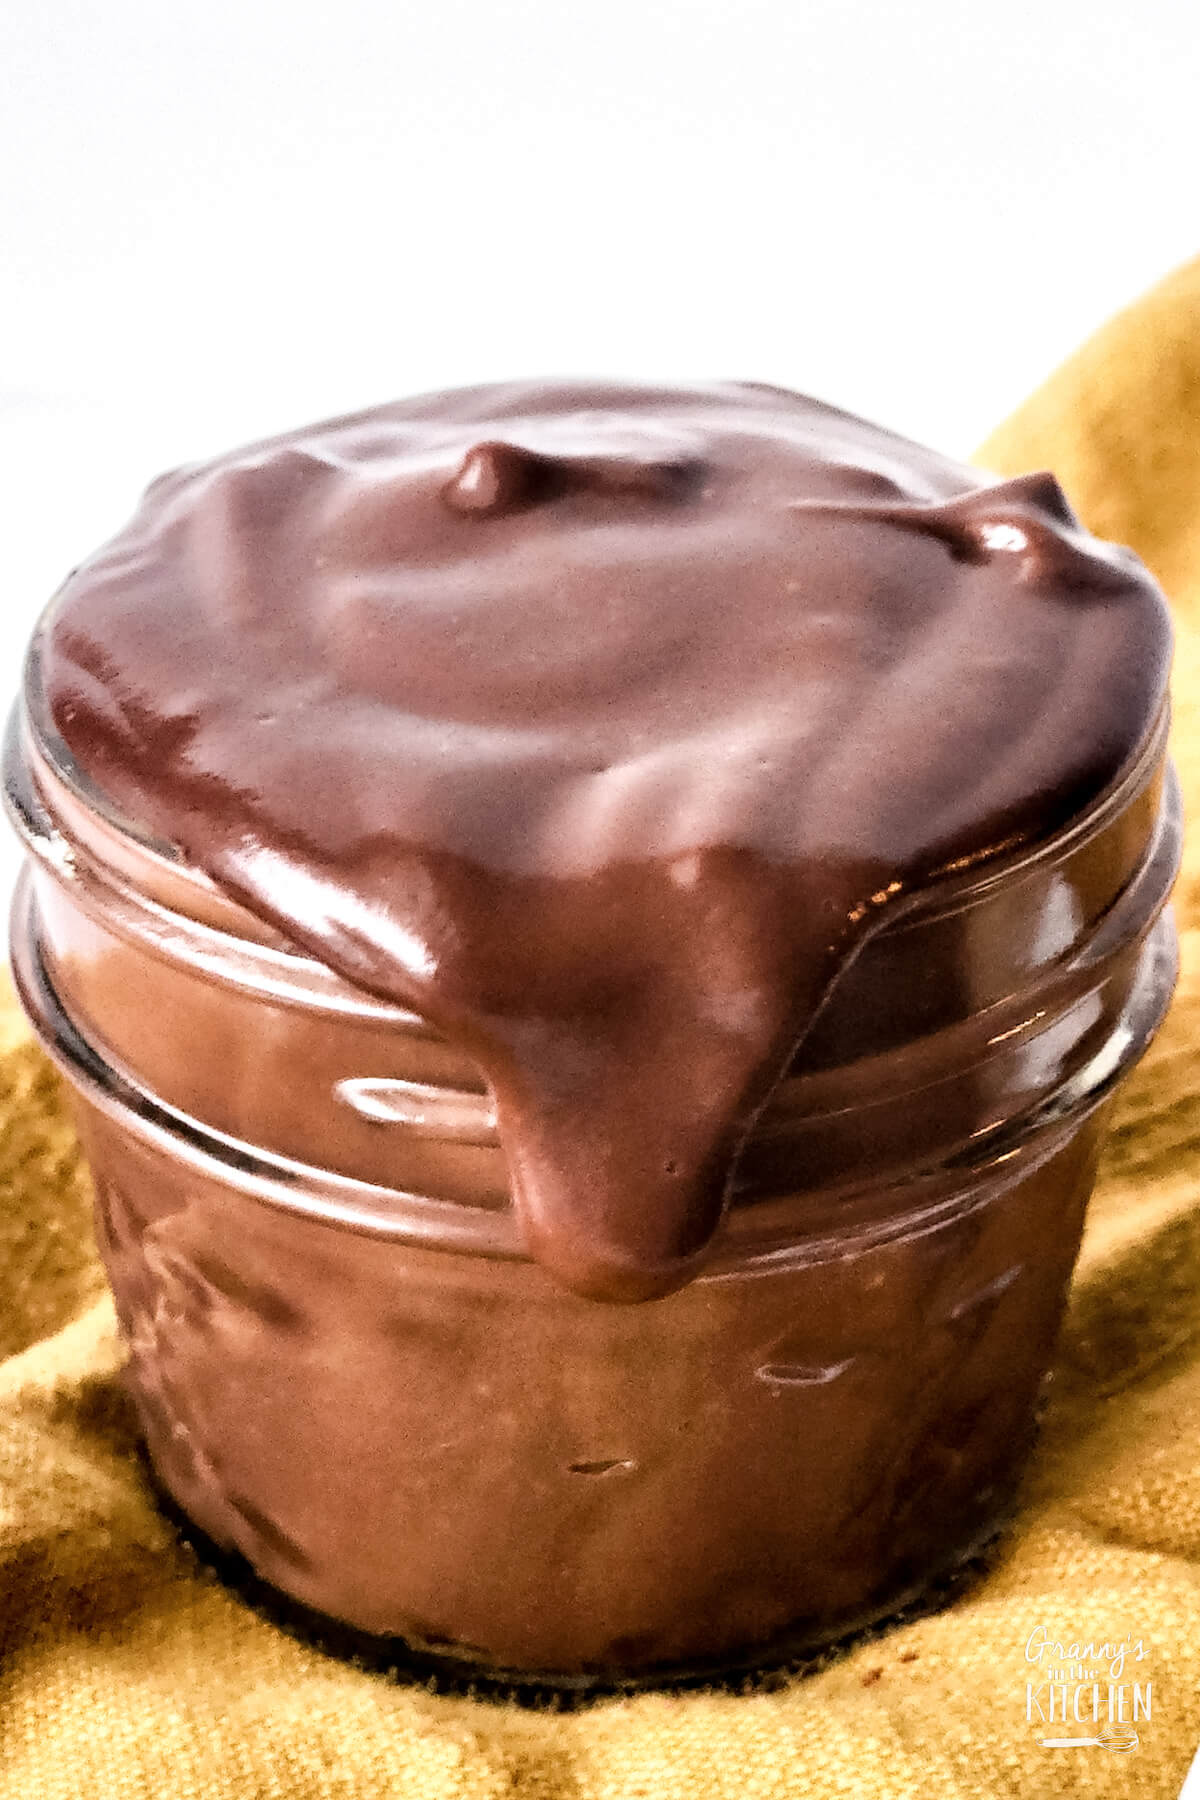 small mason jar full of homemade chocolate sauce.